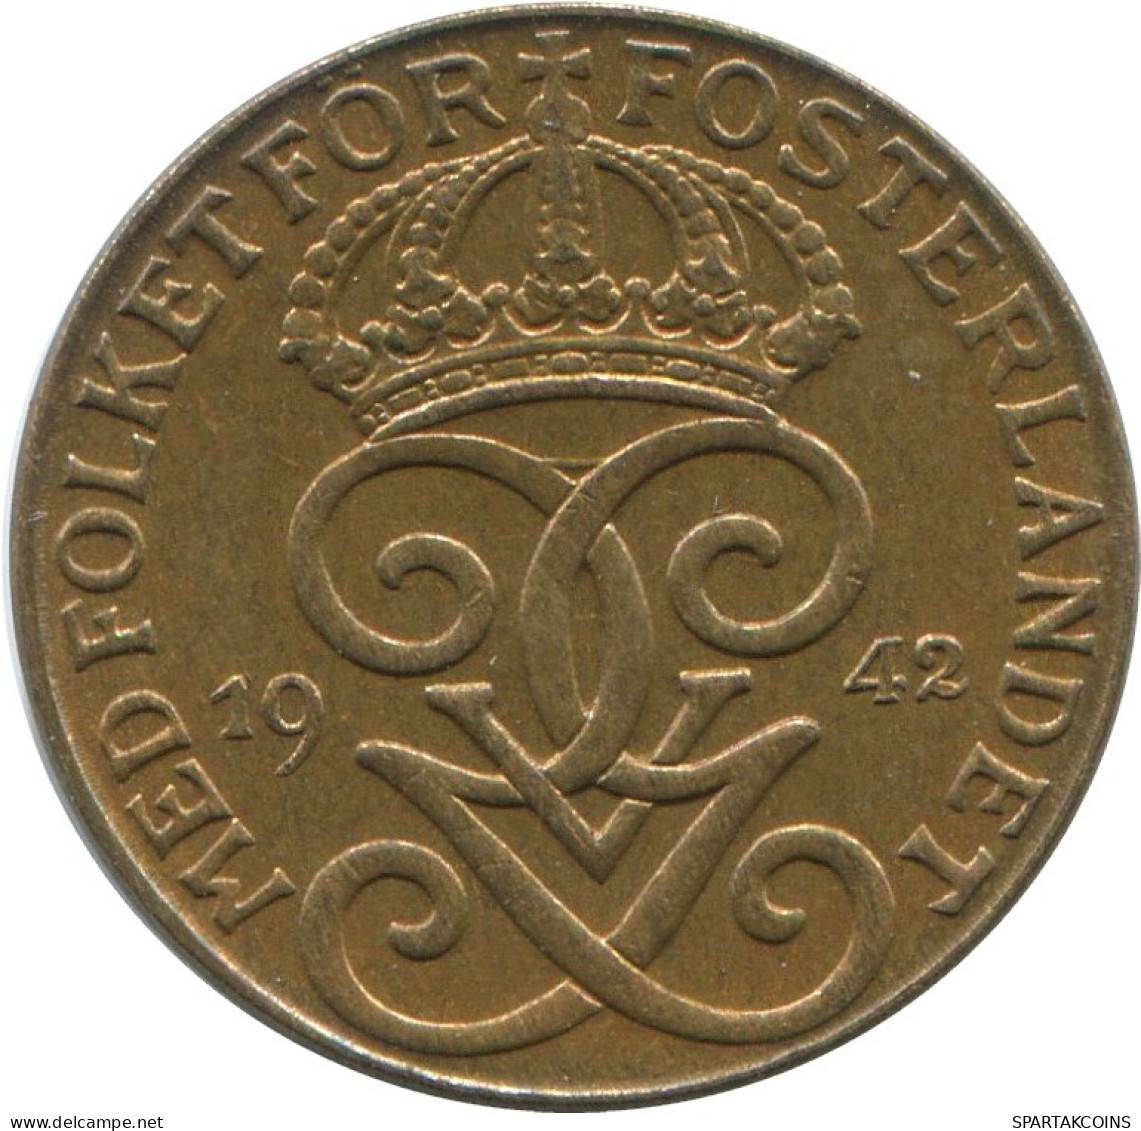 1 ORE 1942 SWEDEN Coin #AD362.2.U.A - Sweden